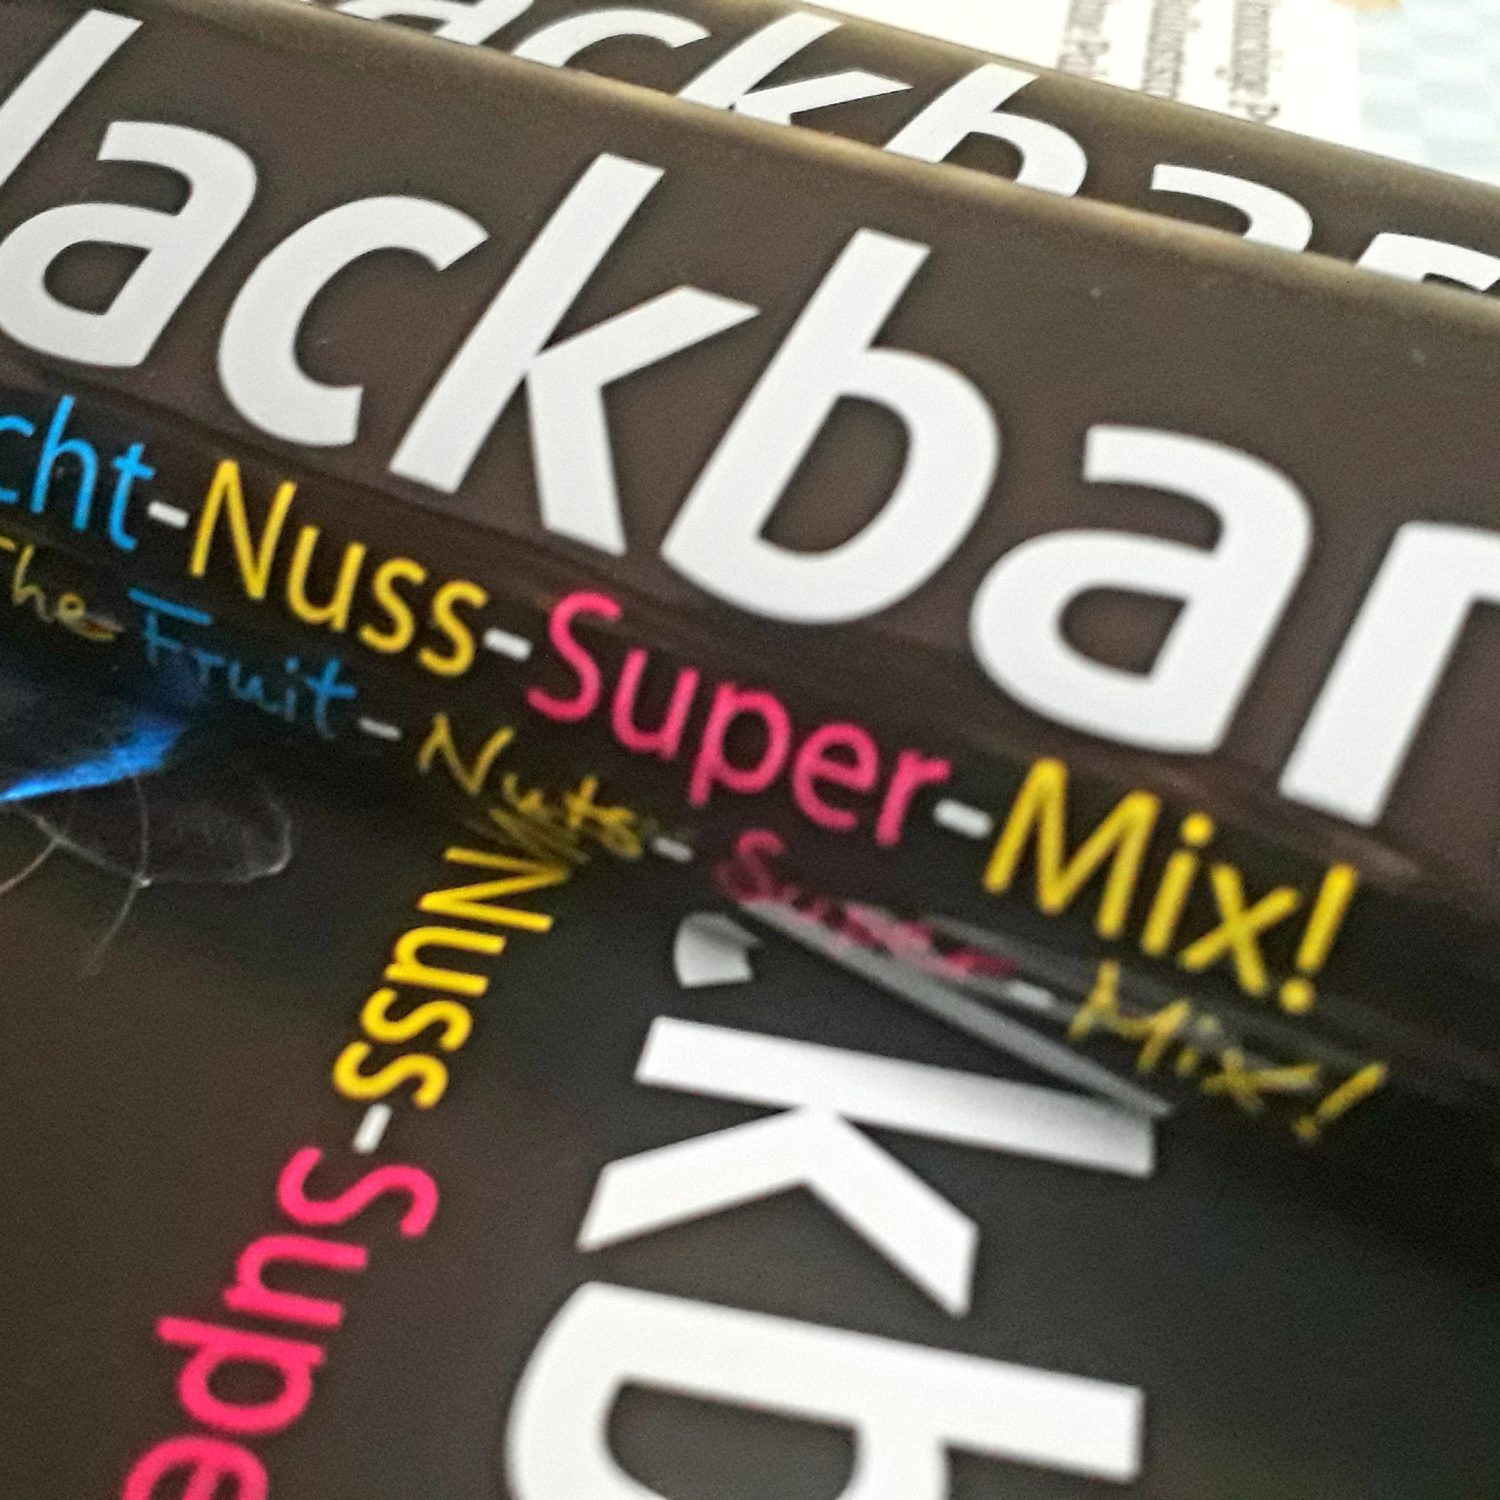 blackbar - Der Frucht-Nuss-Super-Mix!